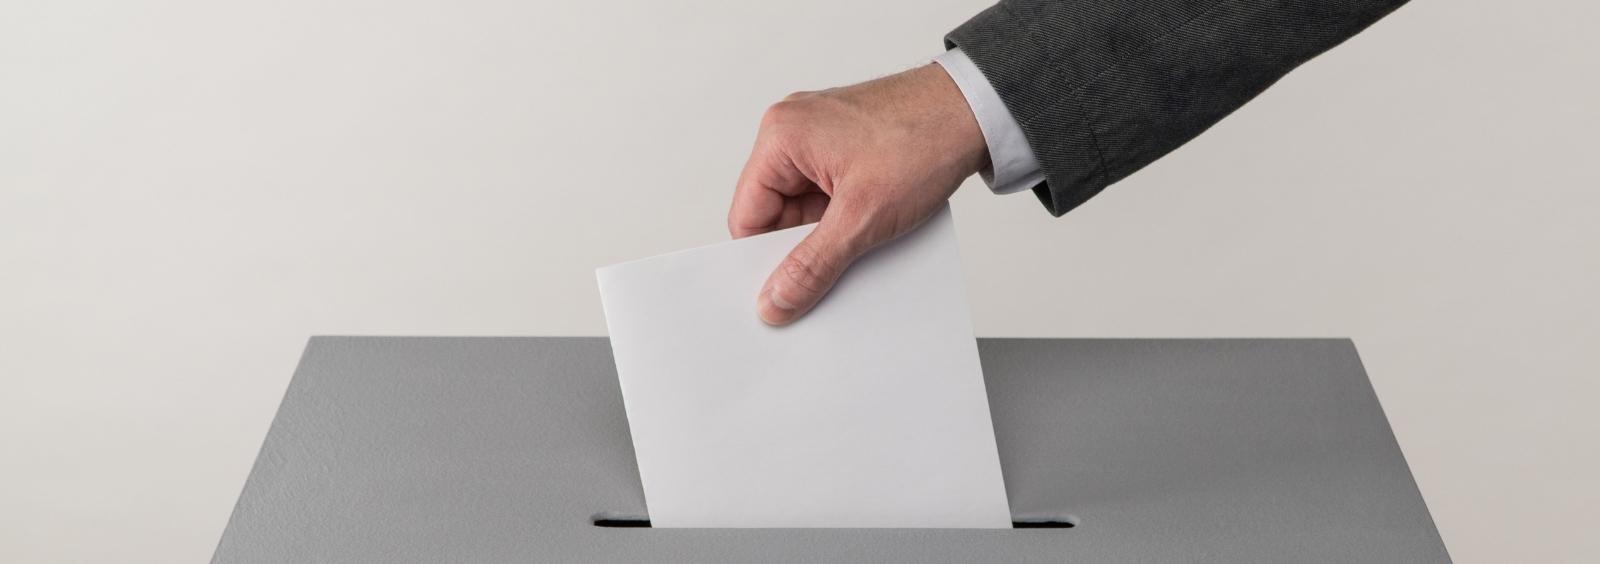 A person putting a ballot in a box.